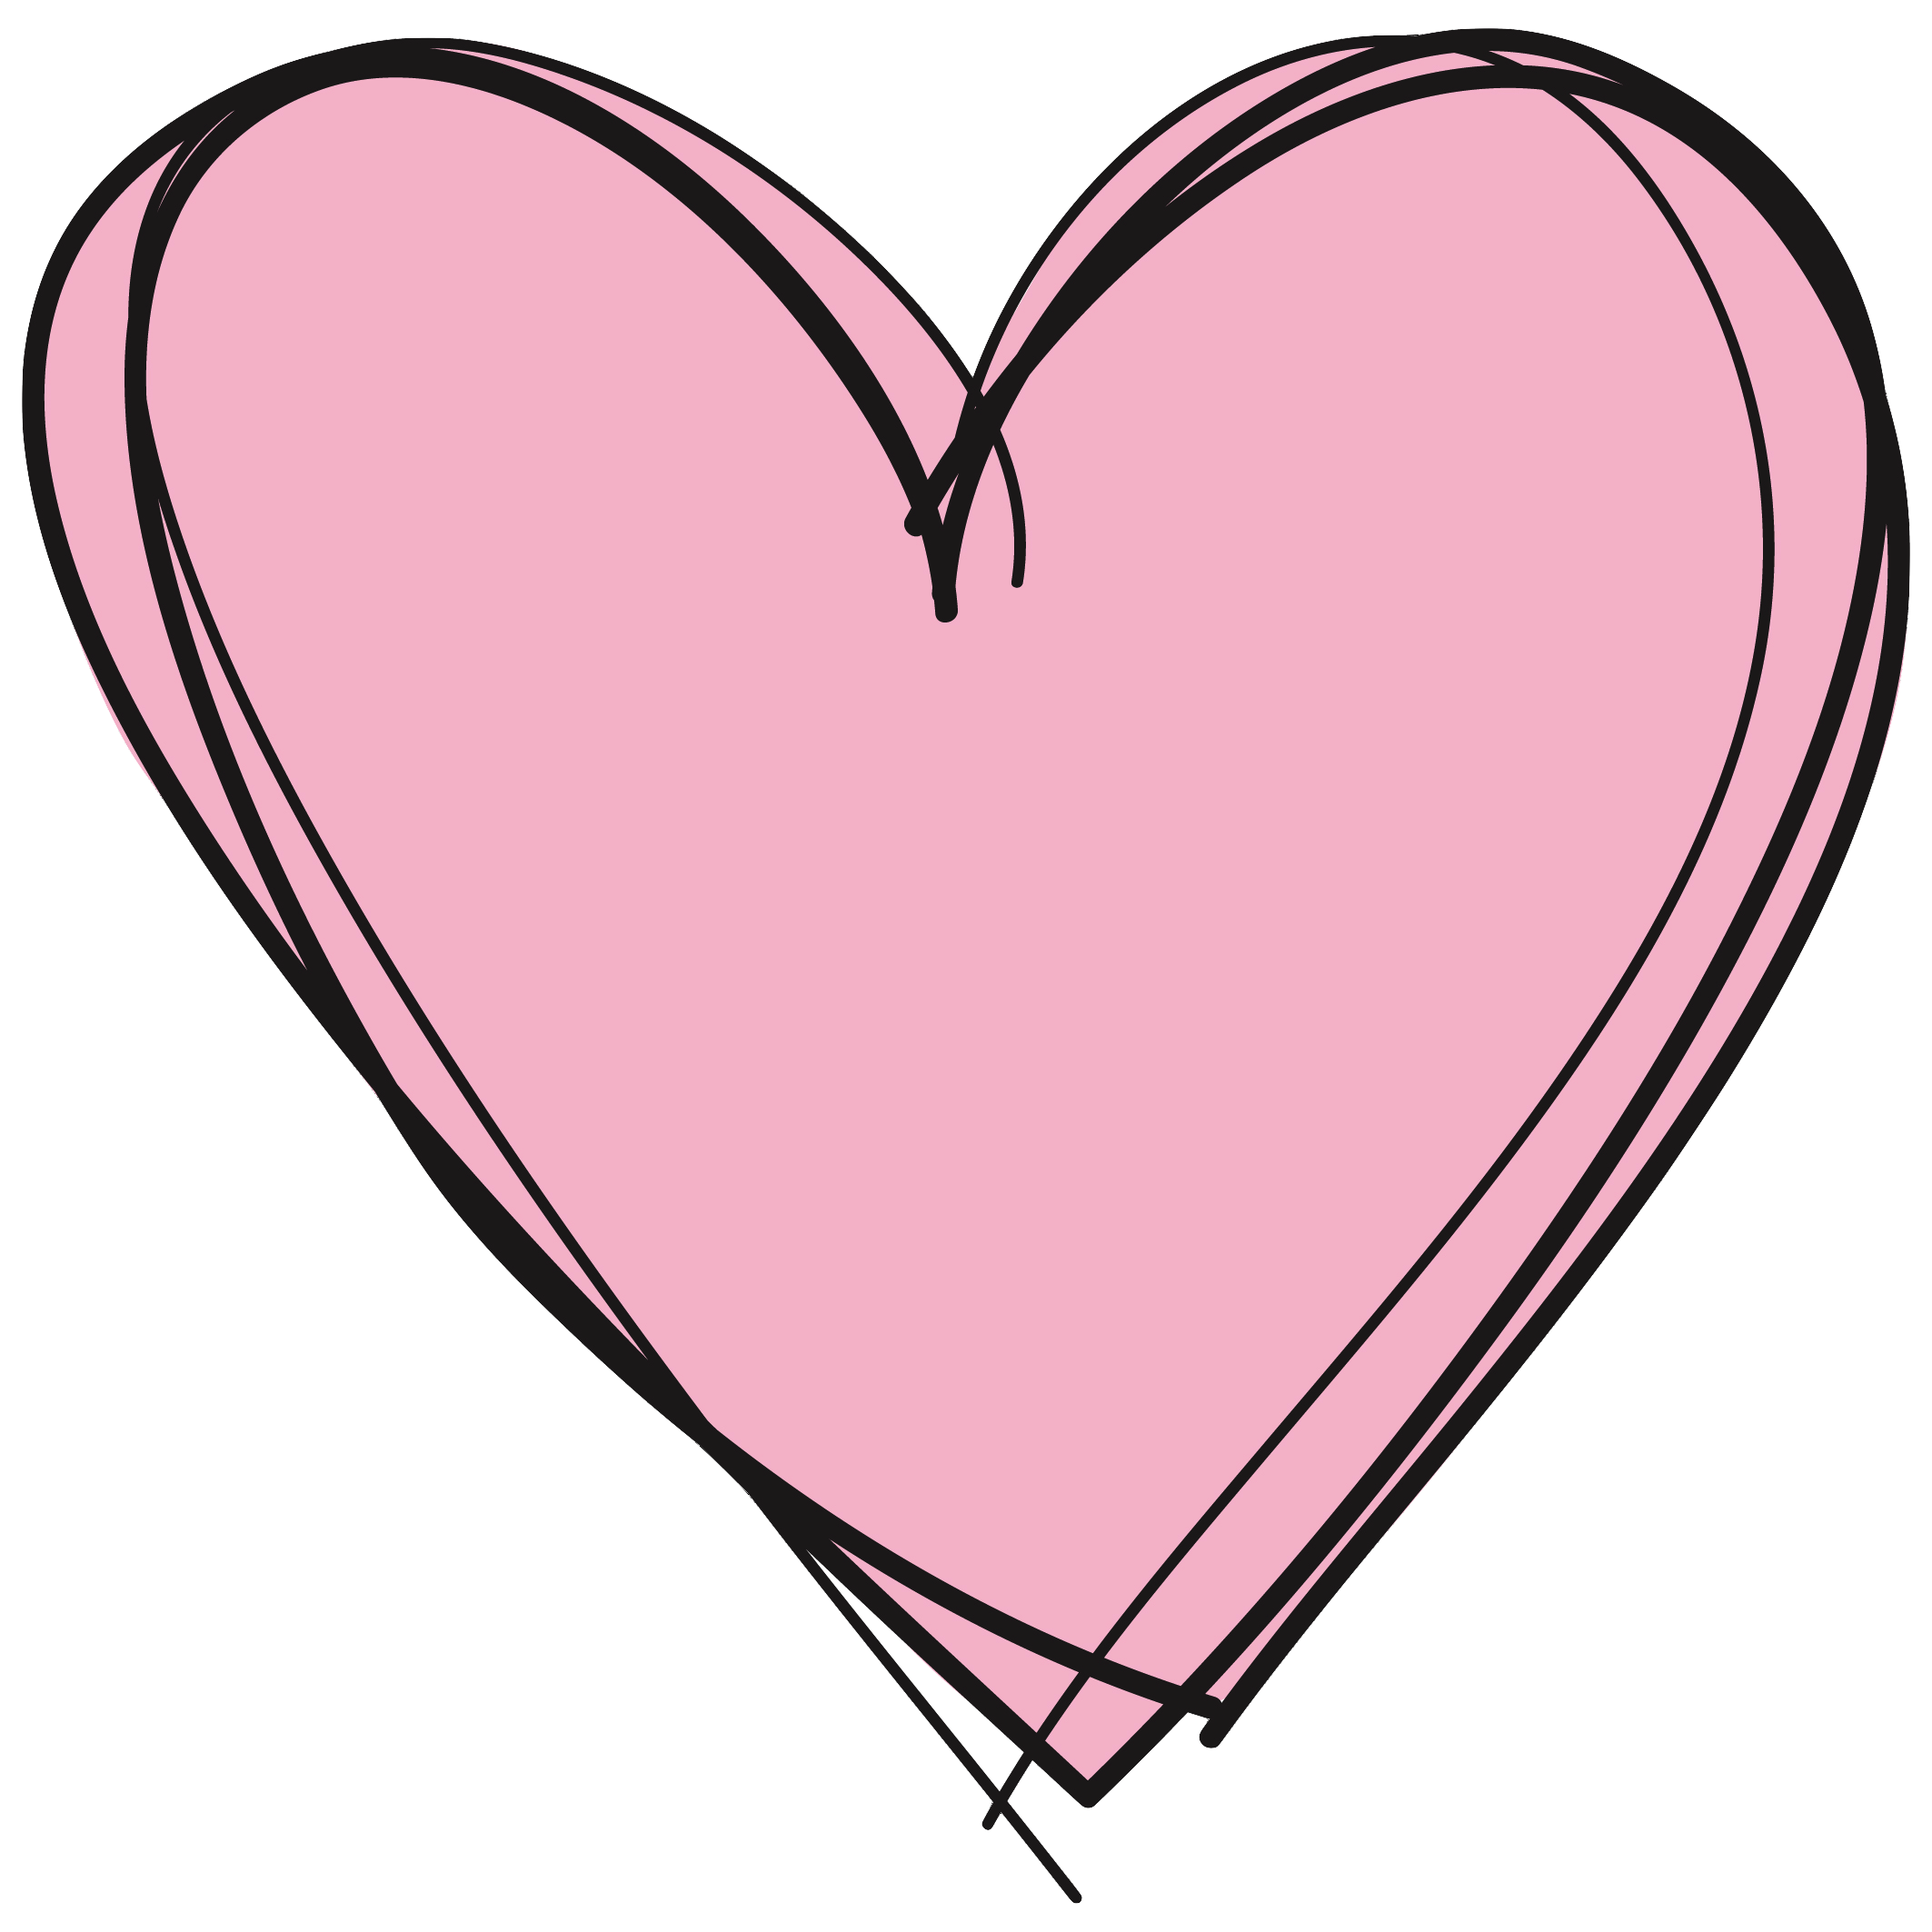 This love this heart. Розовое сердце. Розовые сердечки. Сердечко мультяшное. Нарисовать сердце.